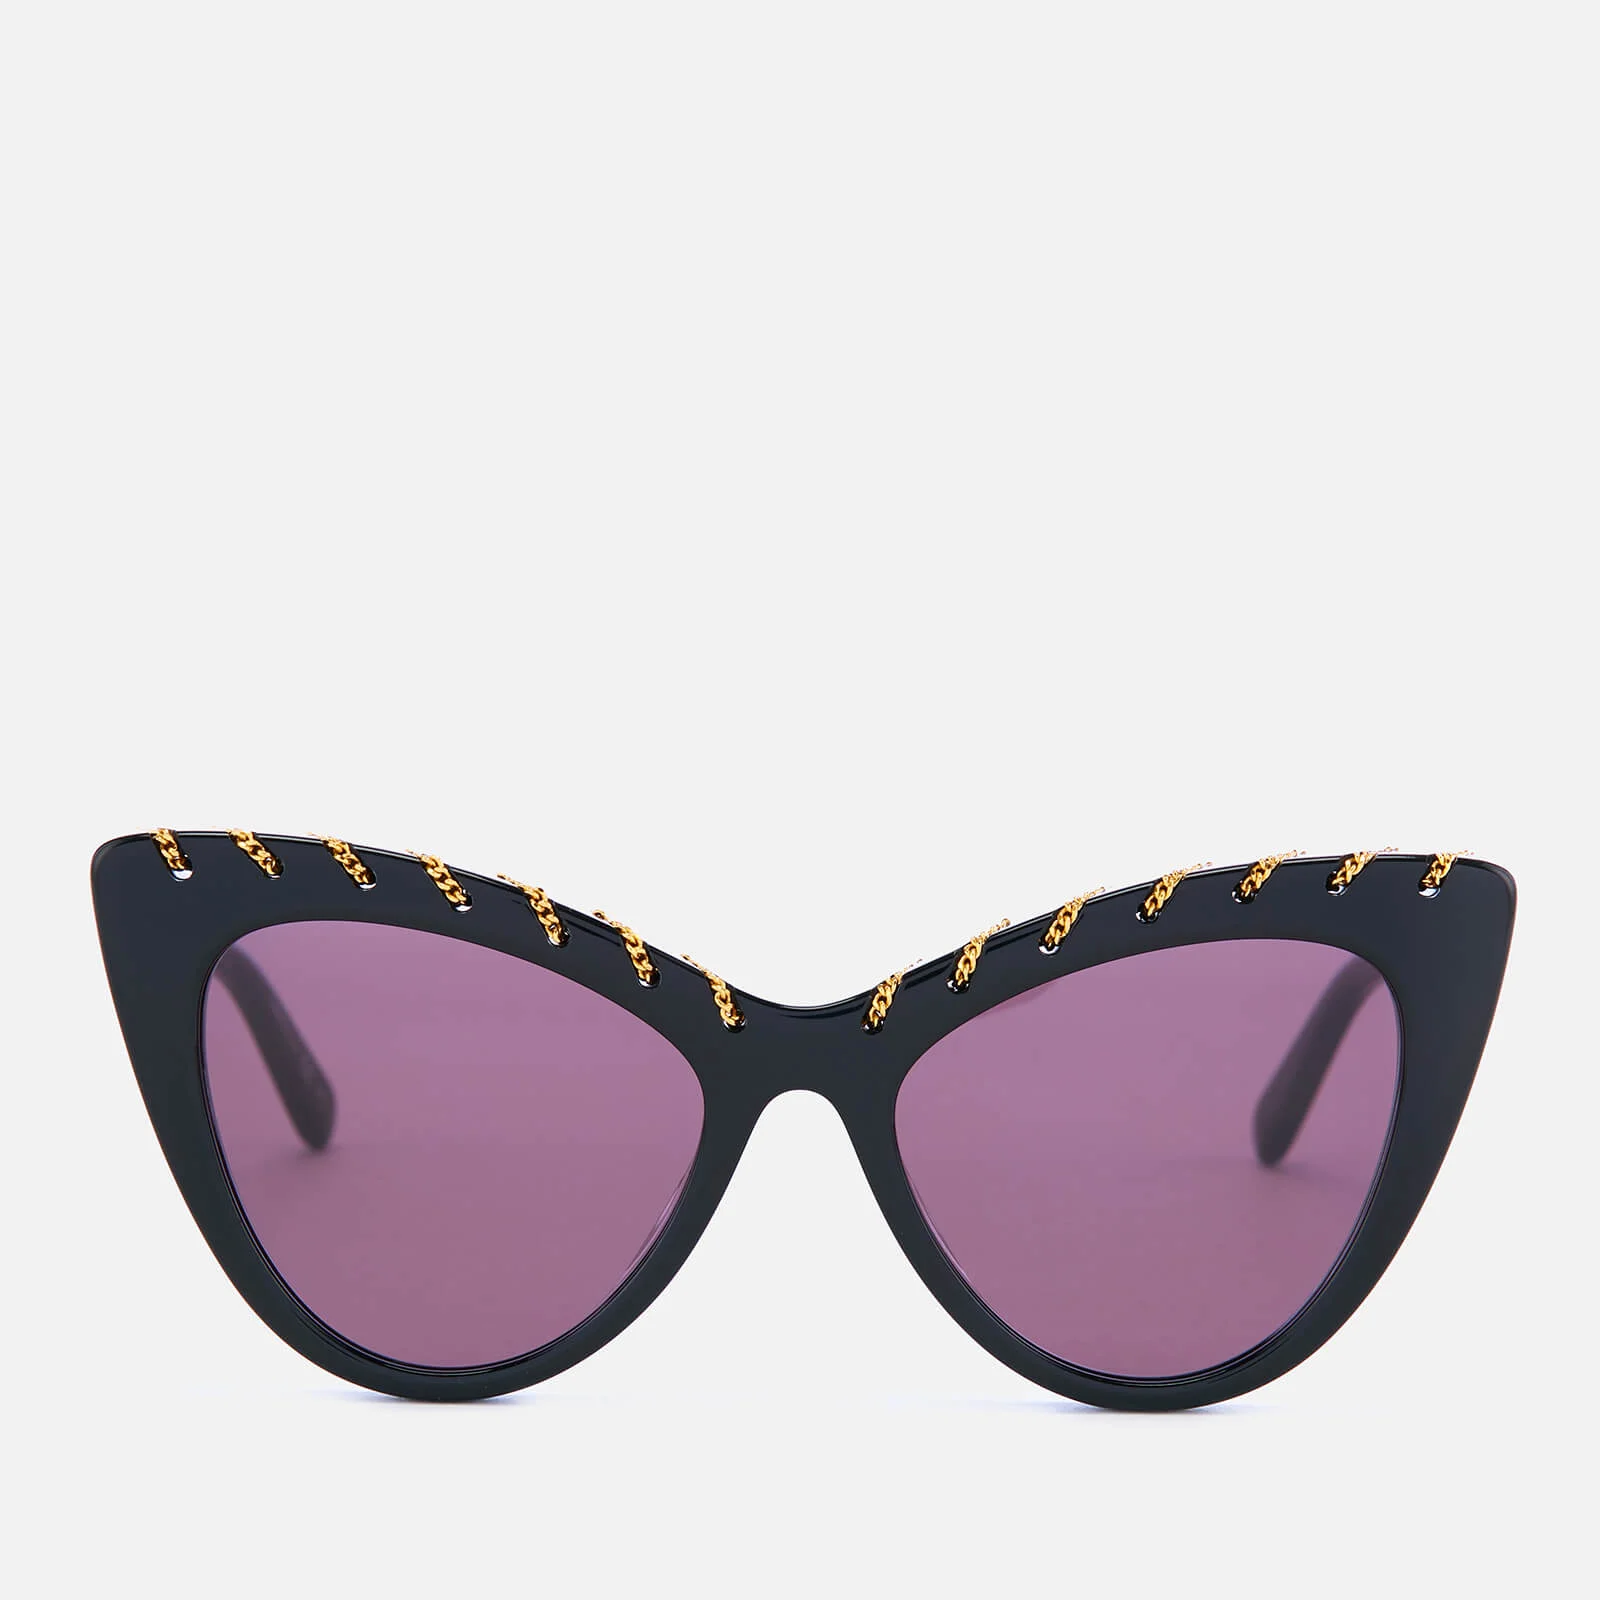 Stella McCartney Women's Cat-Eye Frame Sunglasses - Black Image 1